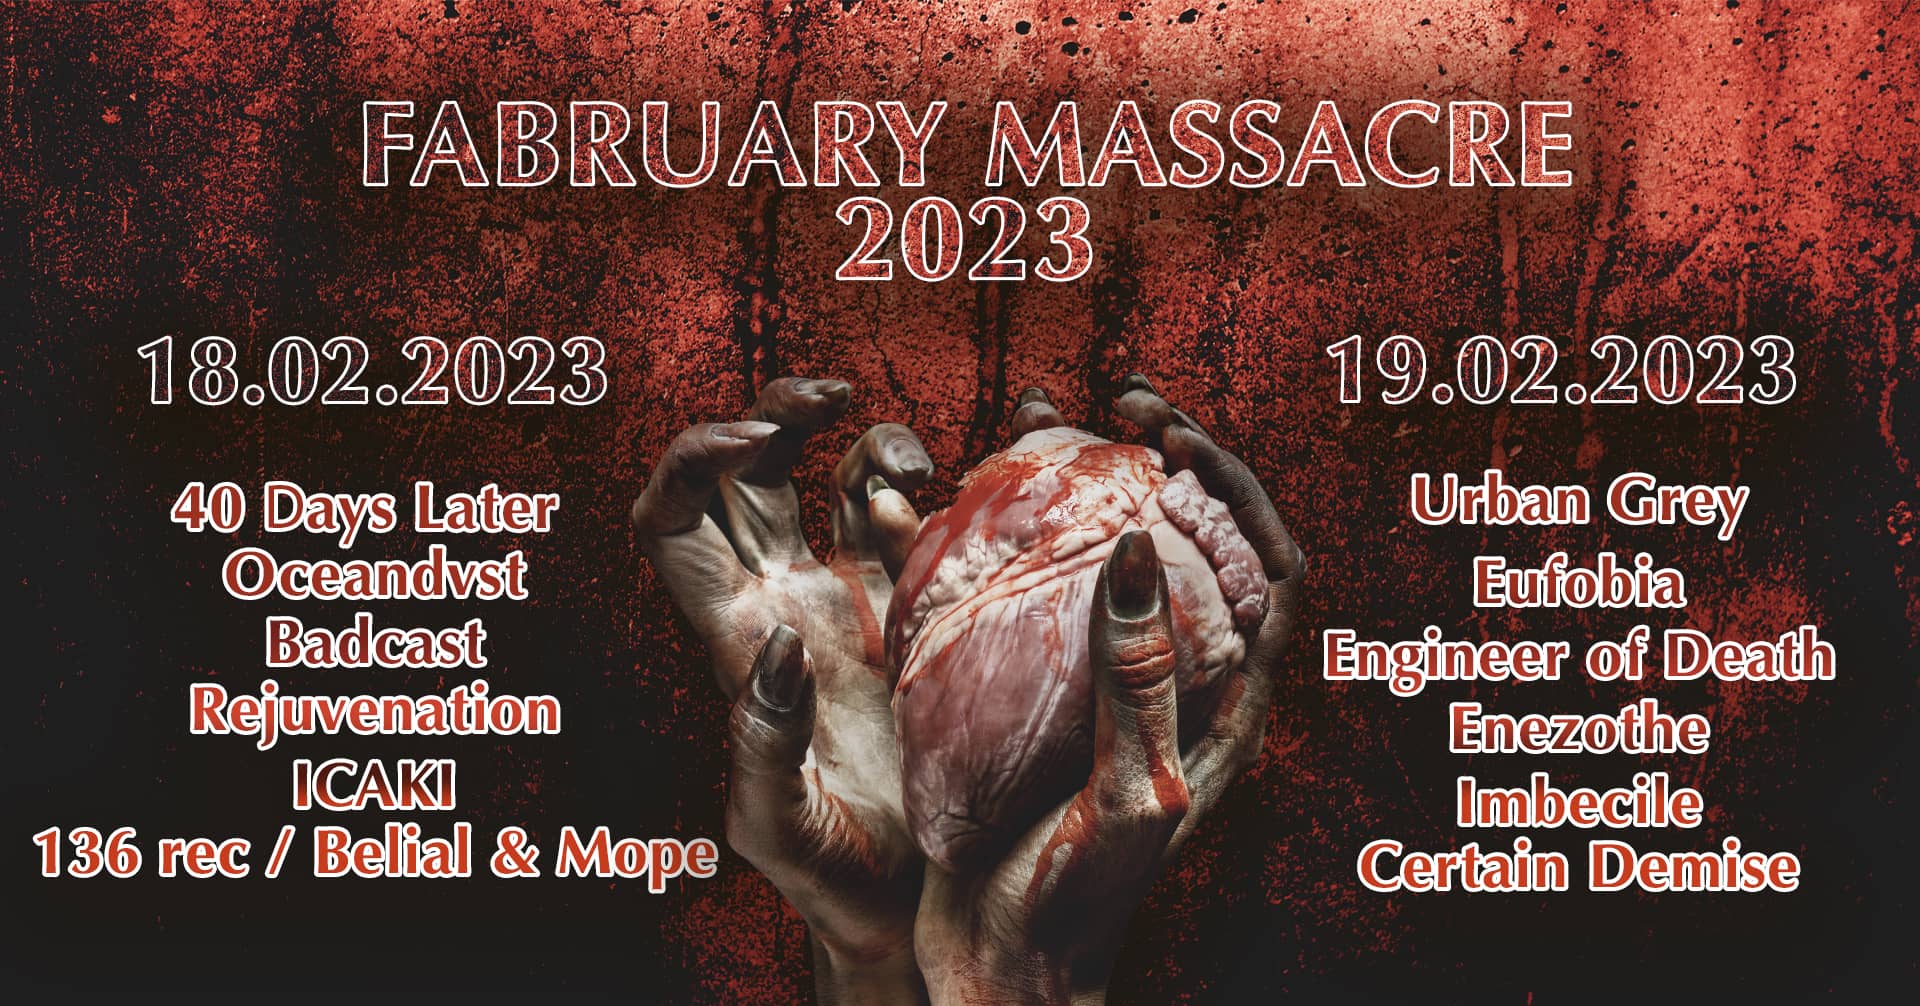 February massacre